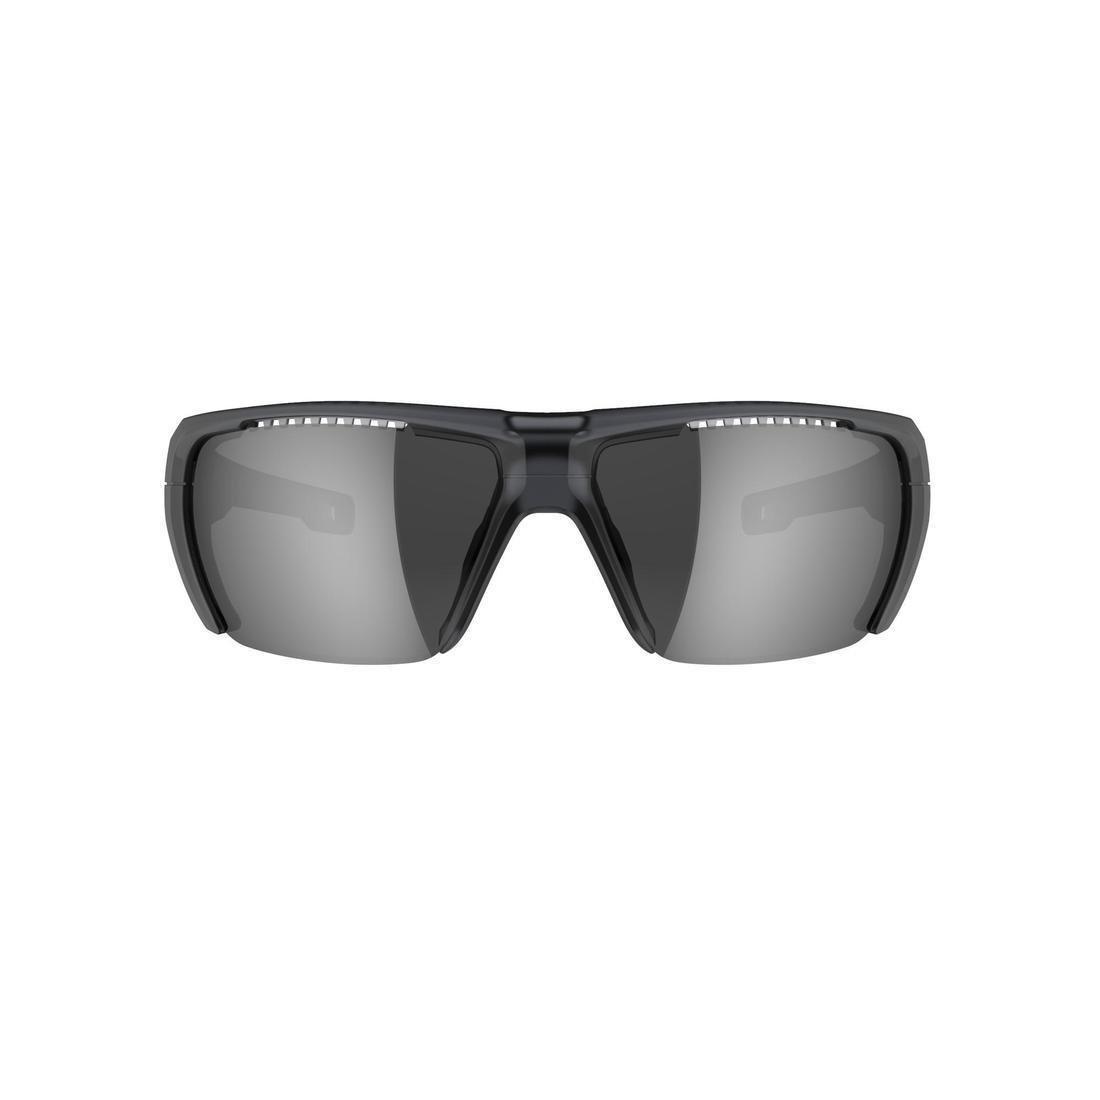 QUECHUA - Adult, Polarised Category 4 Hiking Sunglasses, MH590, Black